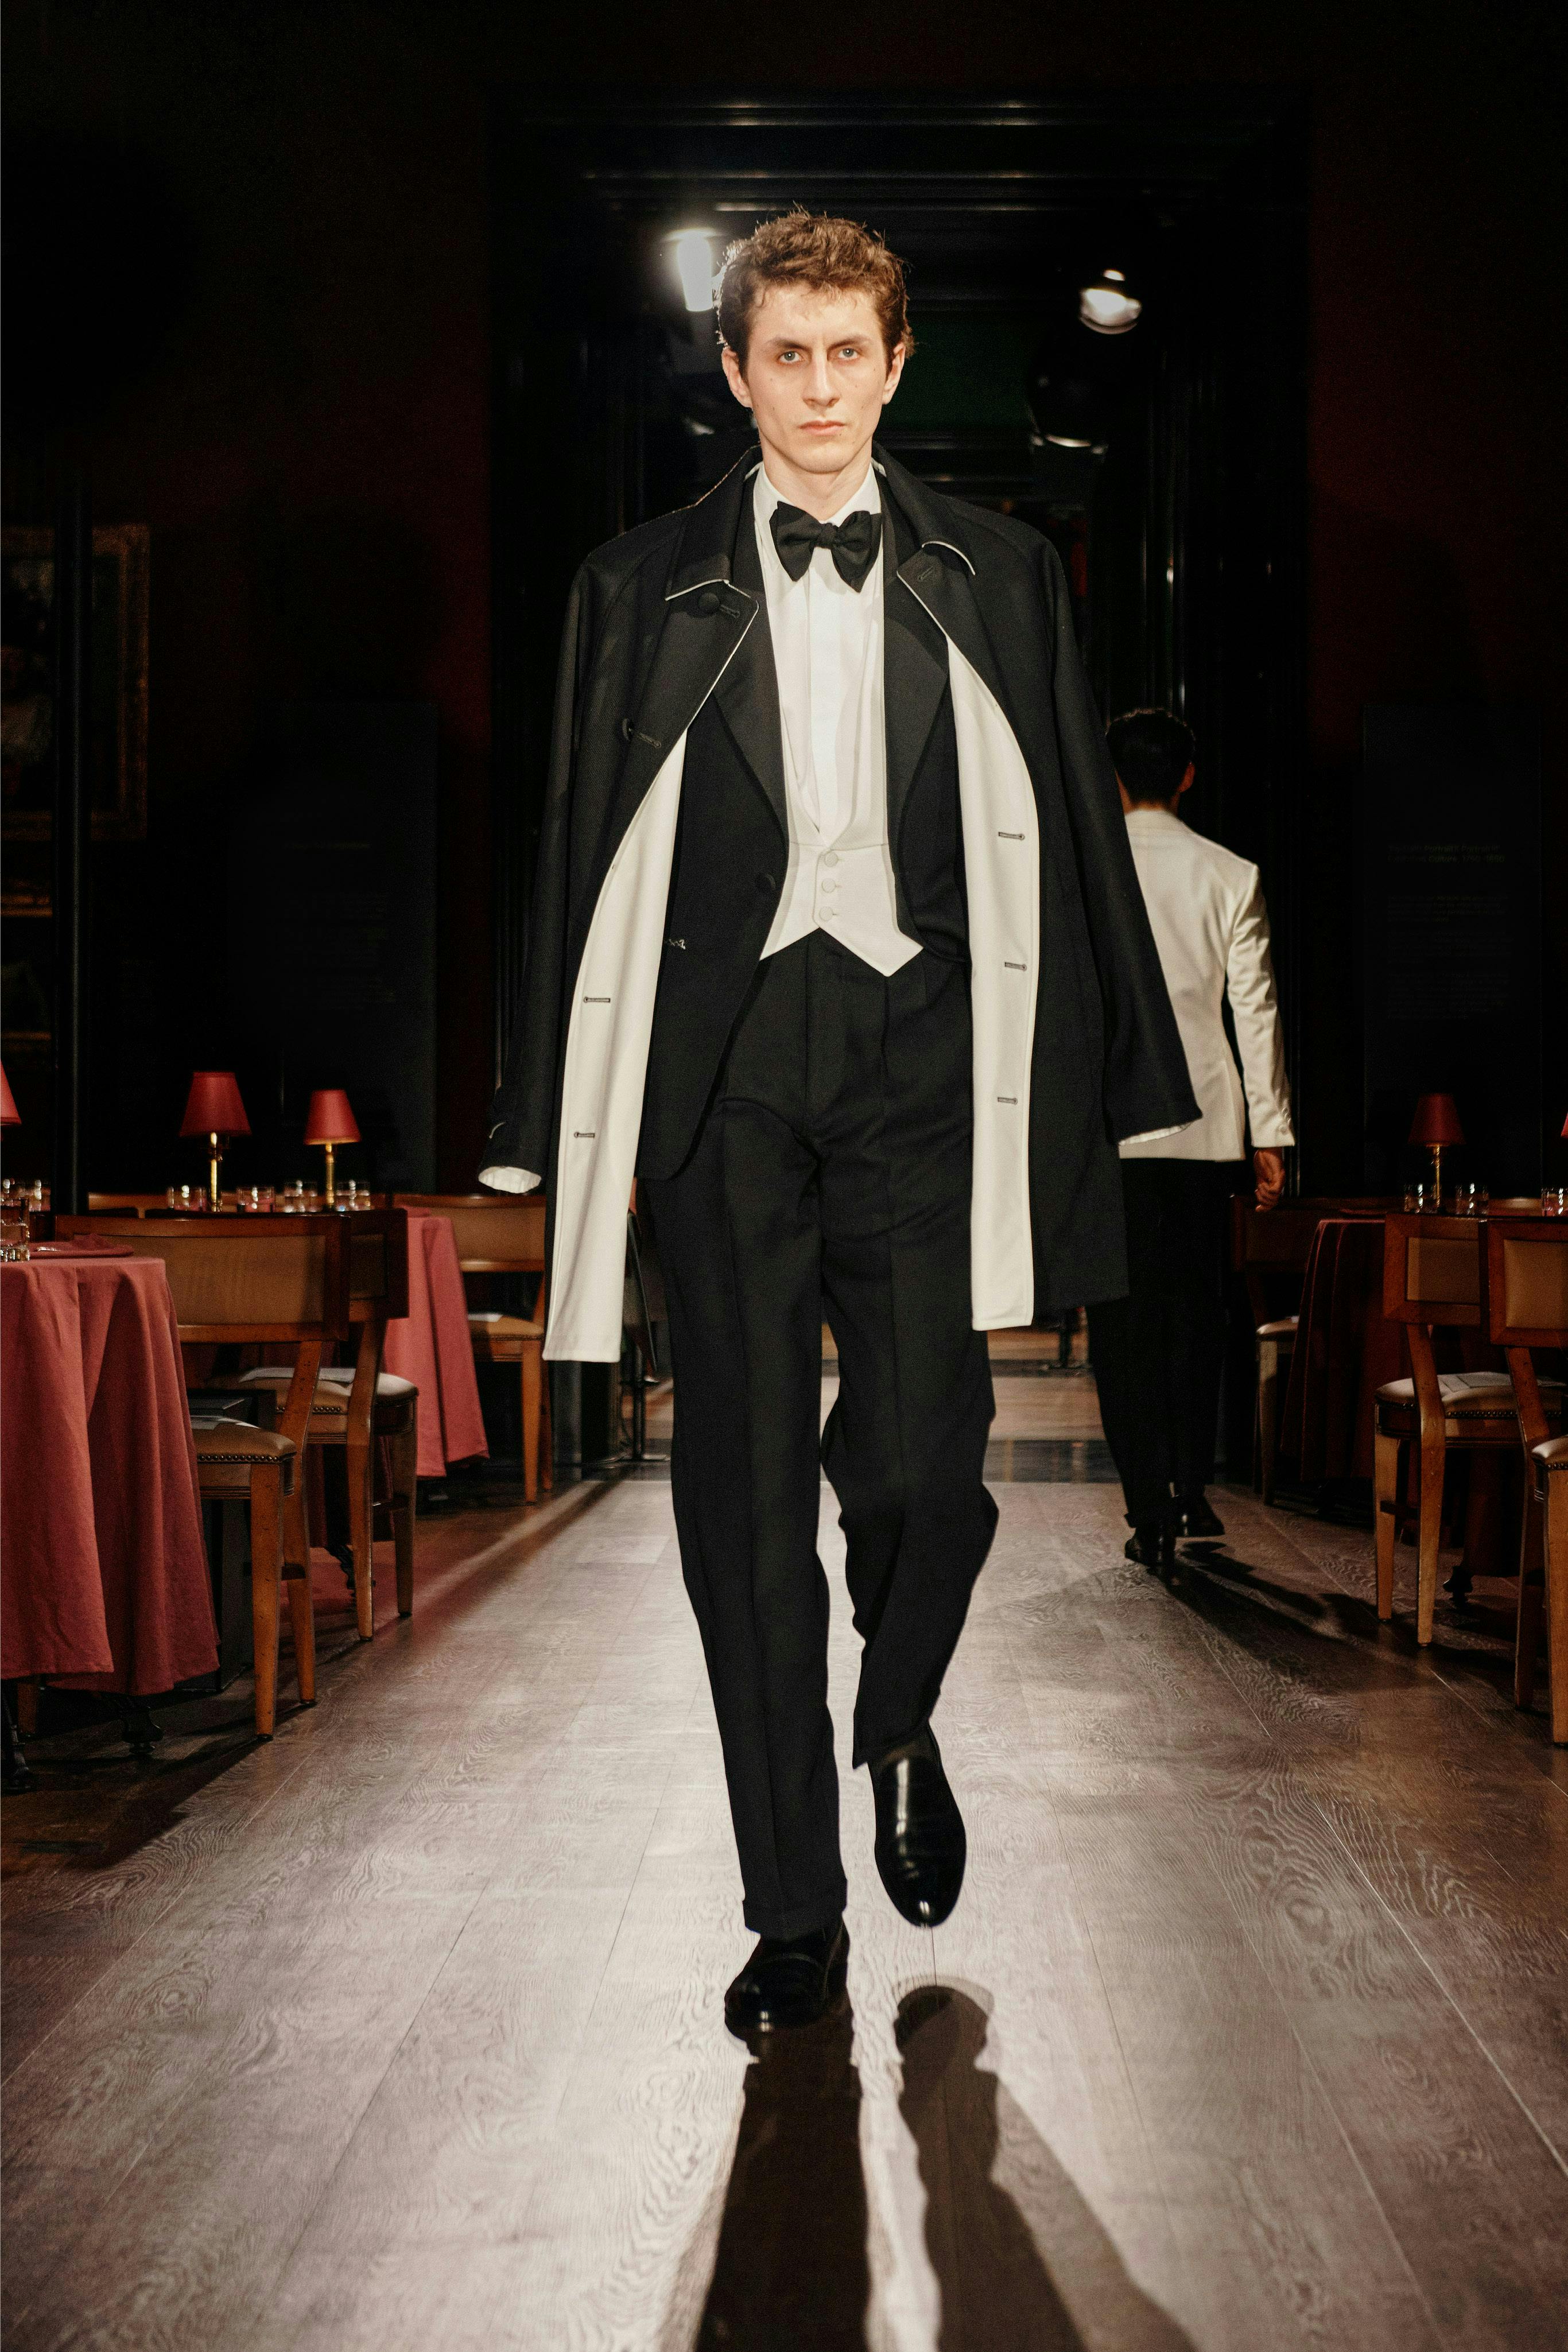 formal wear suit fashion floor flooring tuxedo coat adult man person